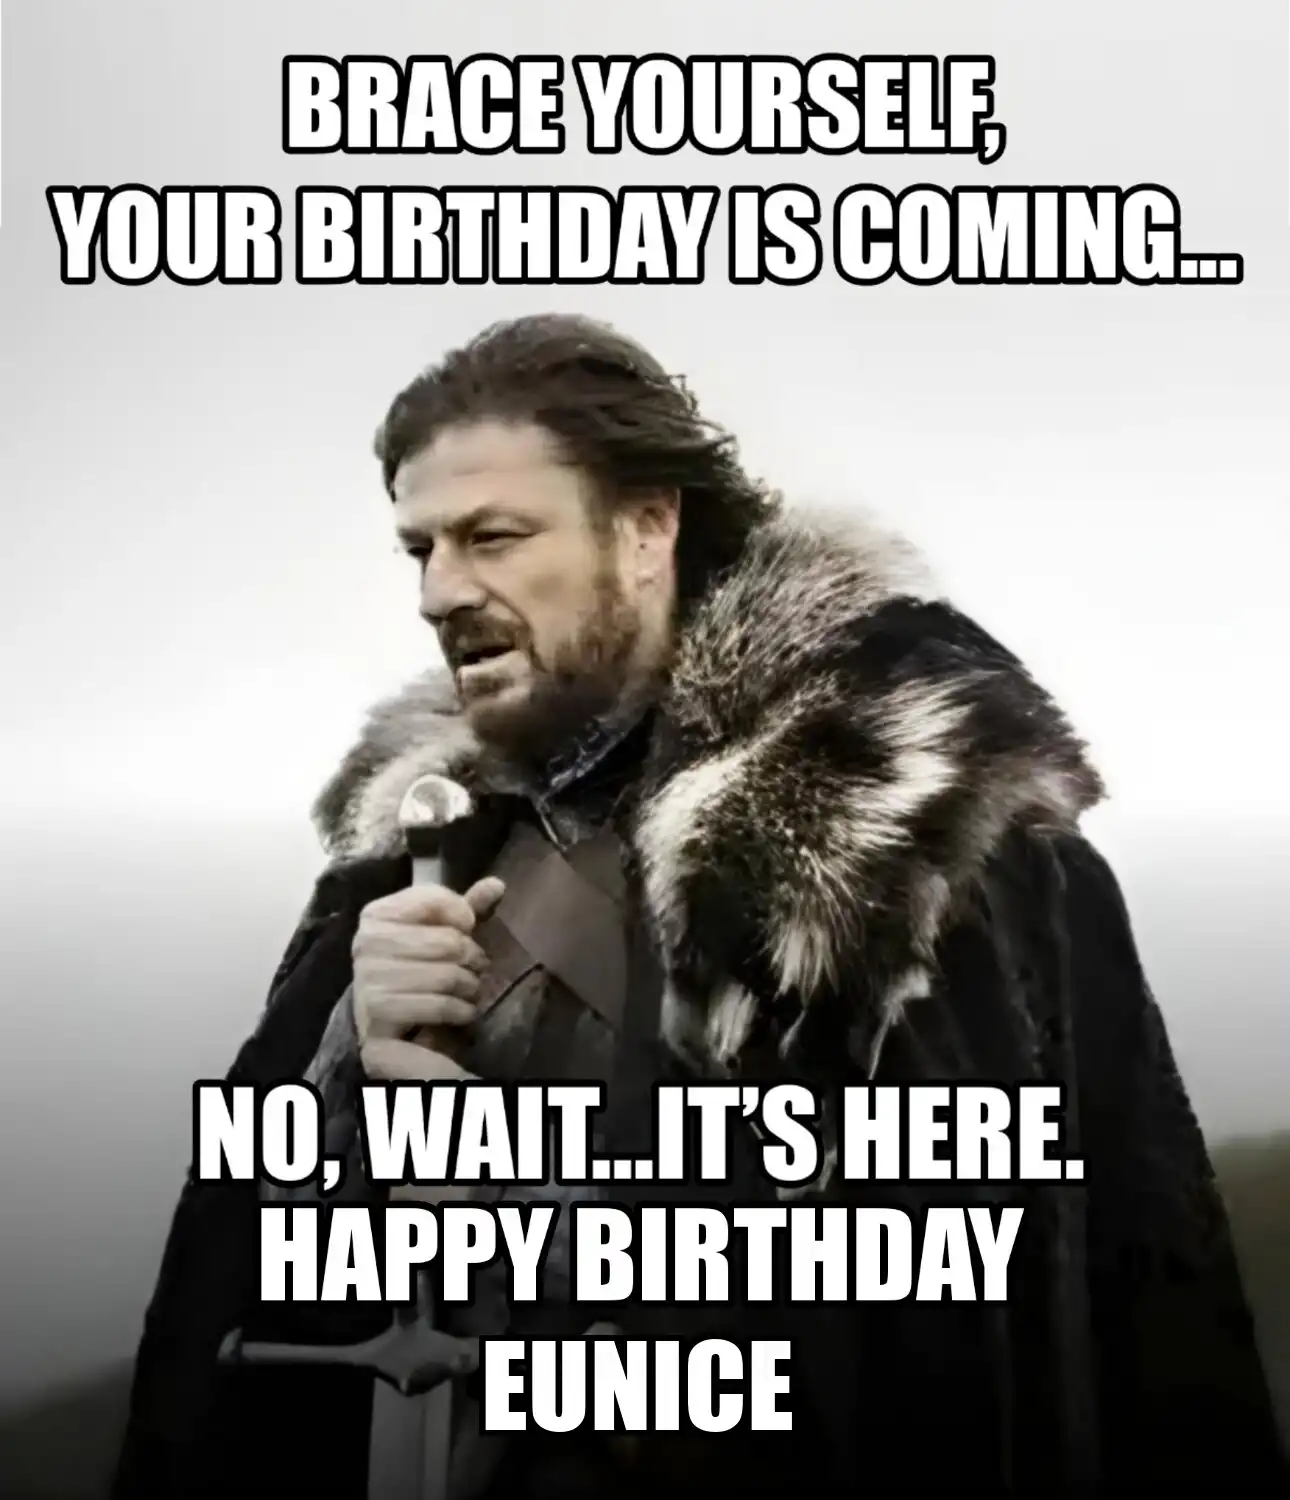 Happy Birthday Eunice Brace Yourself Your Birthday Is Coming Meme